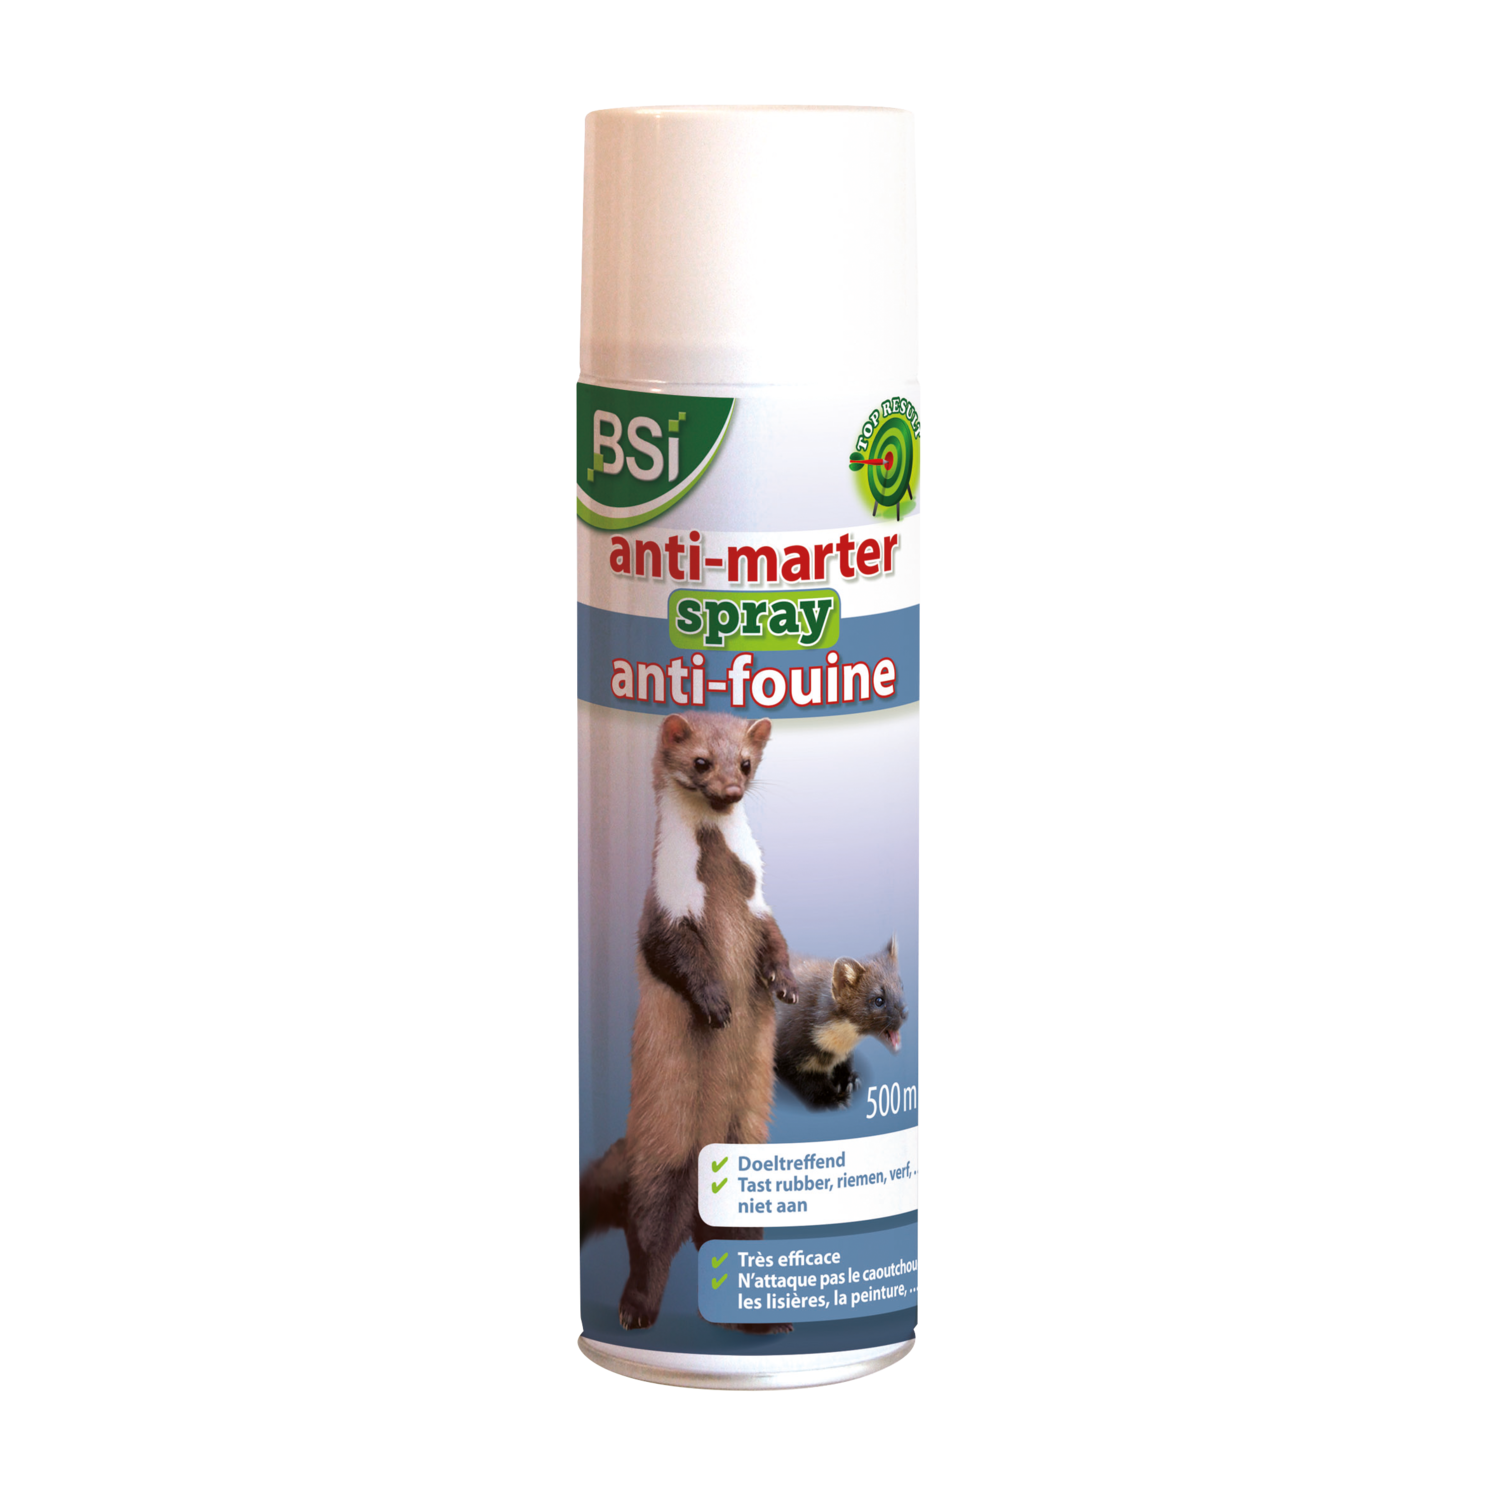 Spray anti-fouine bsi 500 ml